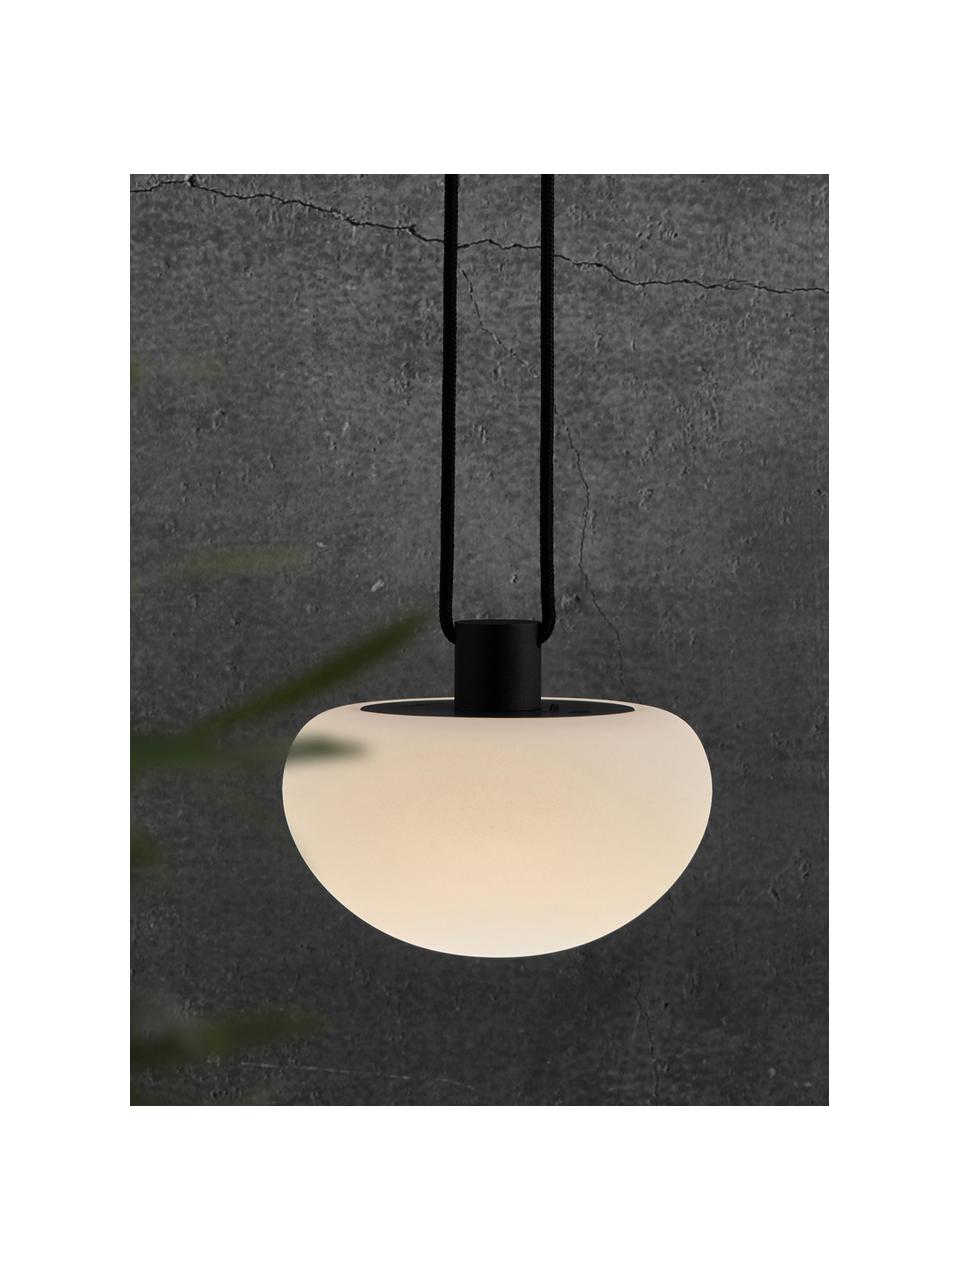 Lampada a sospensione portatile con luce regolabile Sponge, Paralume: plastica, Bianco, nero, Ø 20 x Alt. 16 cm